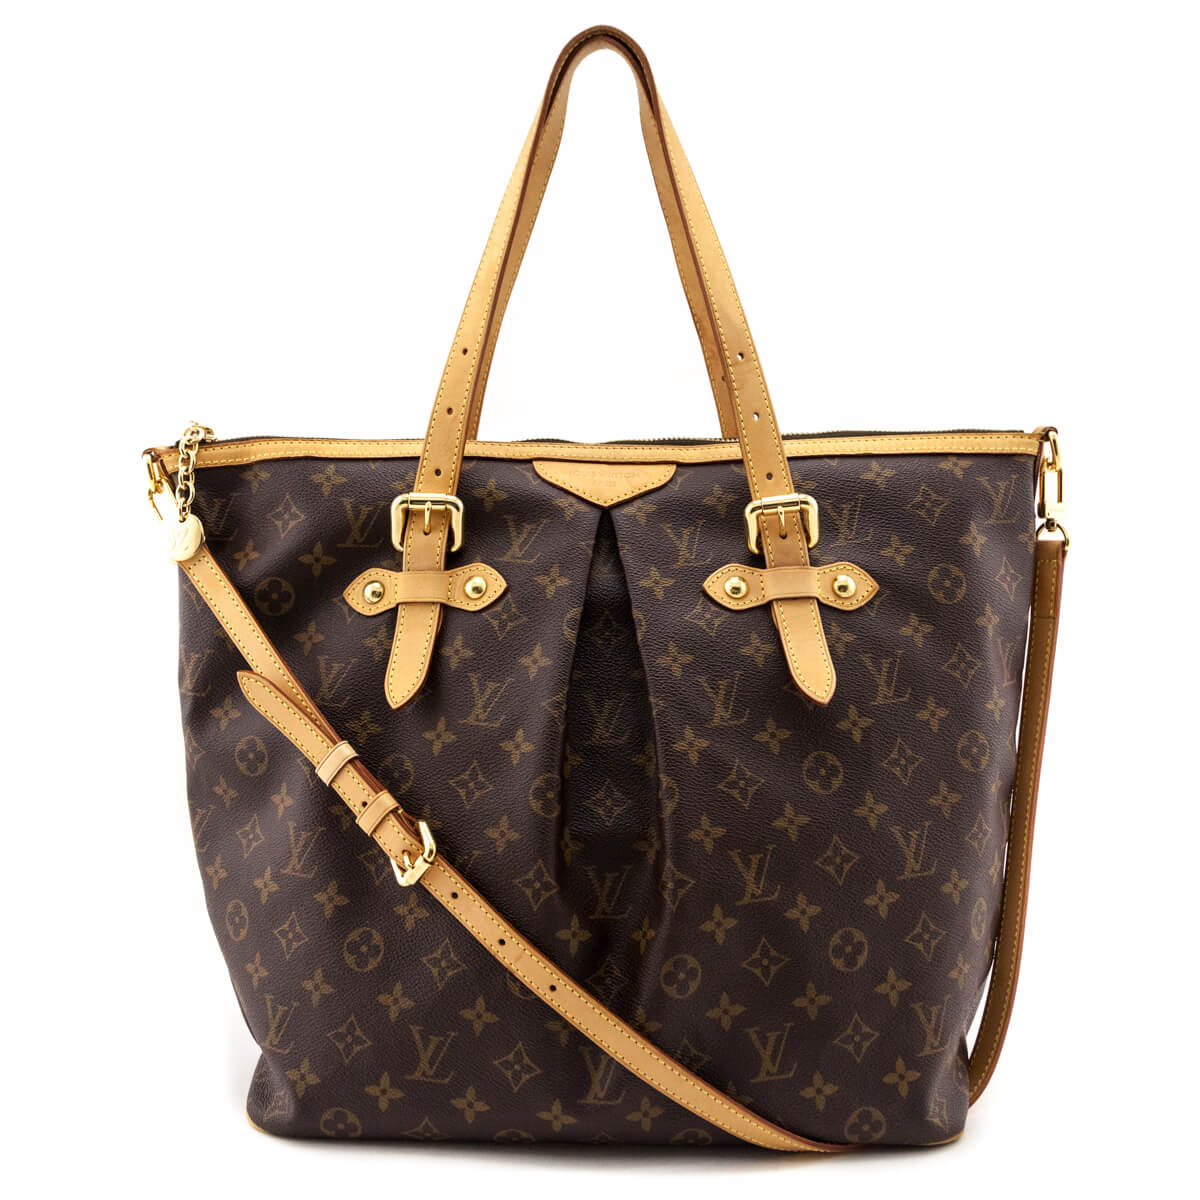 Fashion Stitched Zip Around Gold Emblem Fashion Handbag